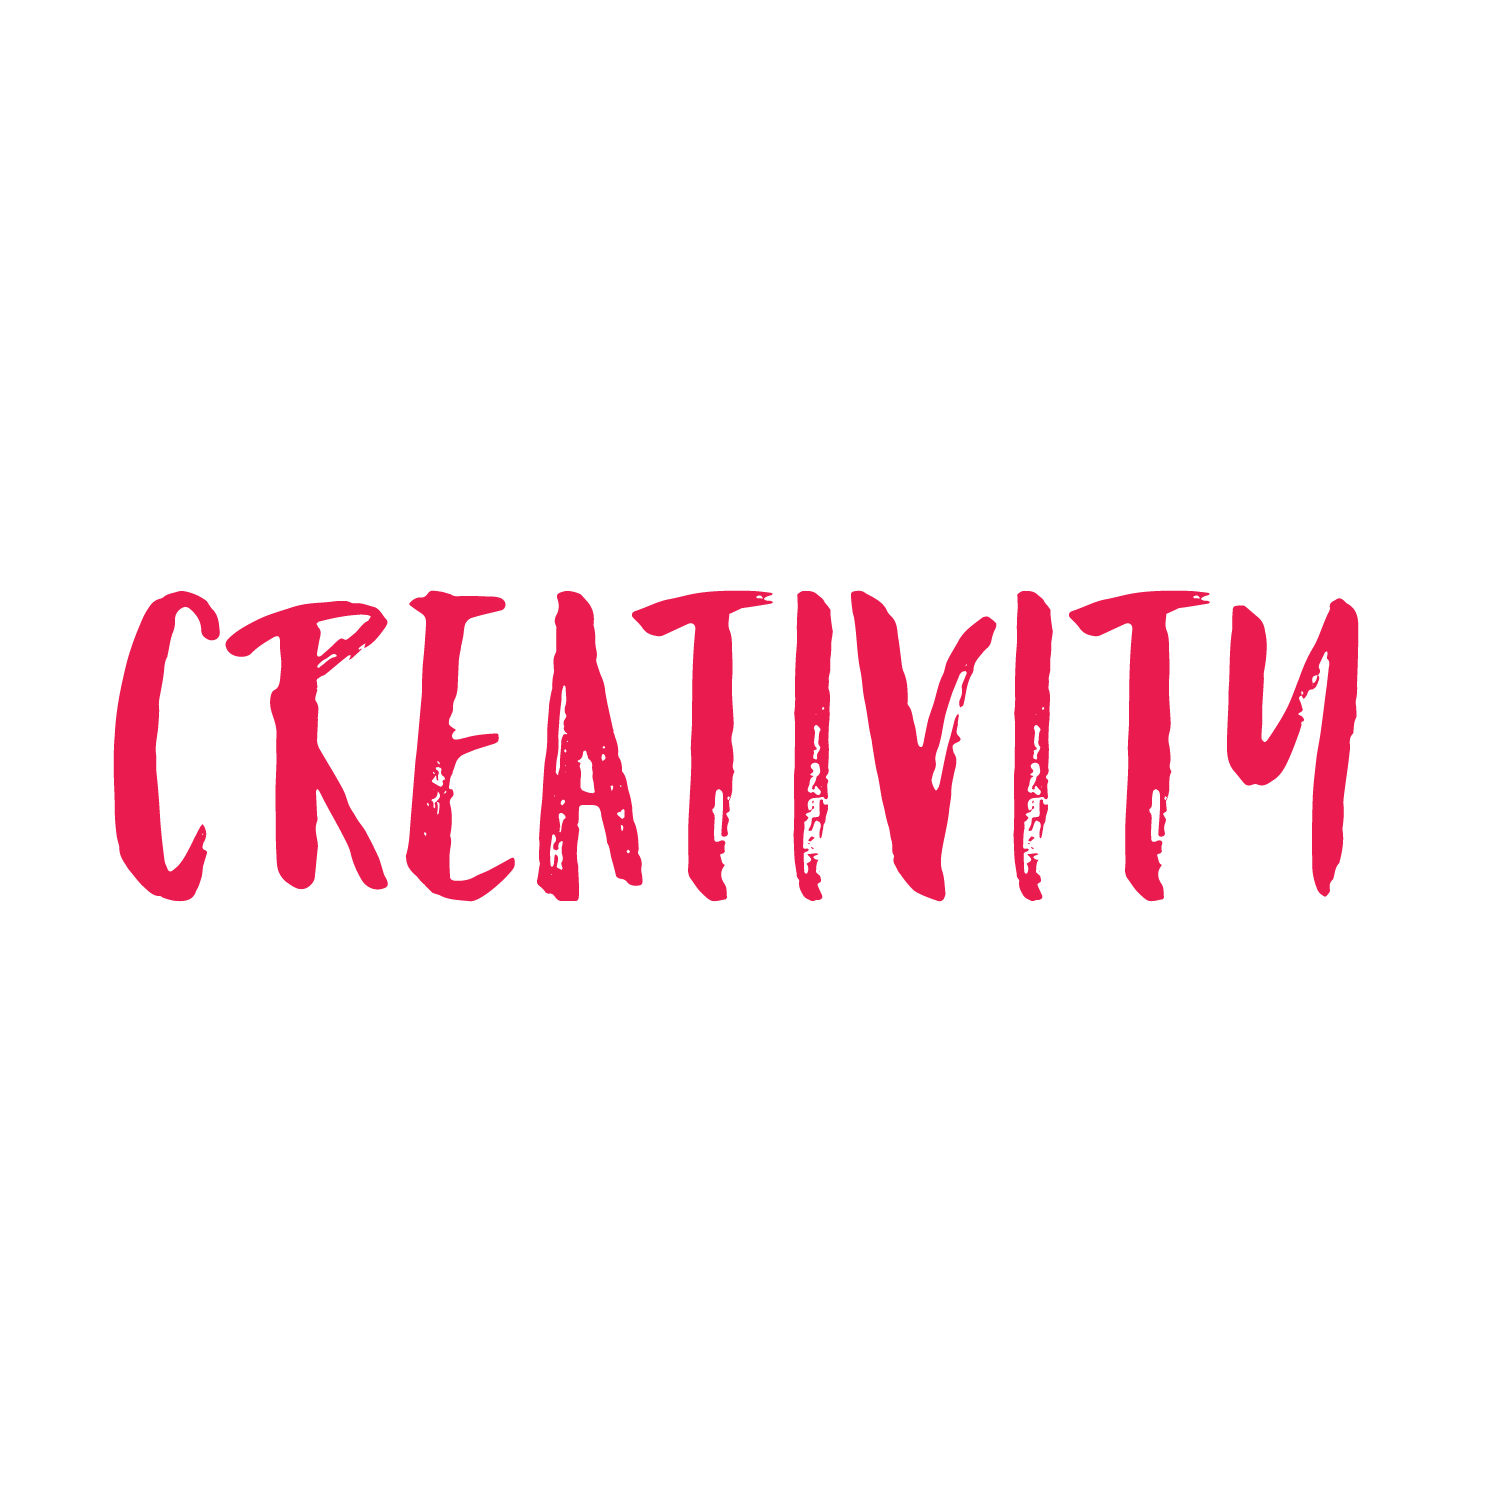 Creativity-07.png